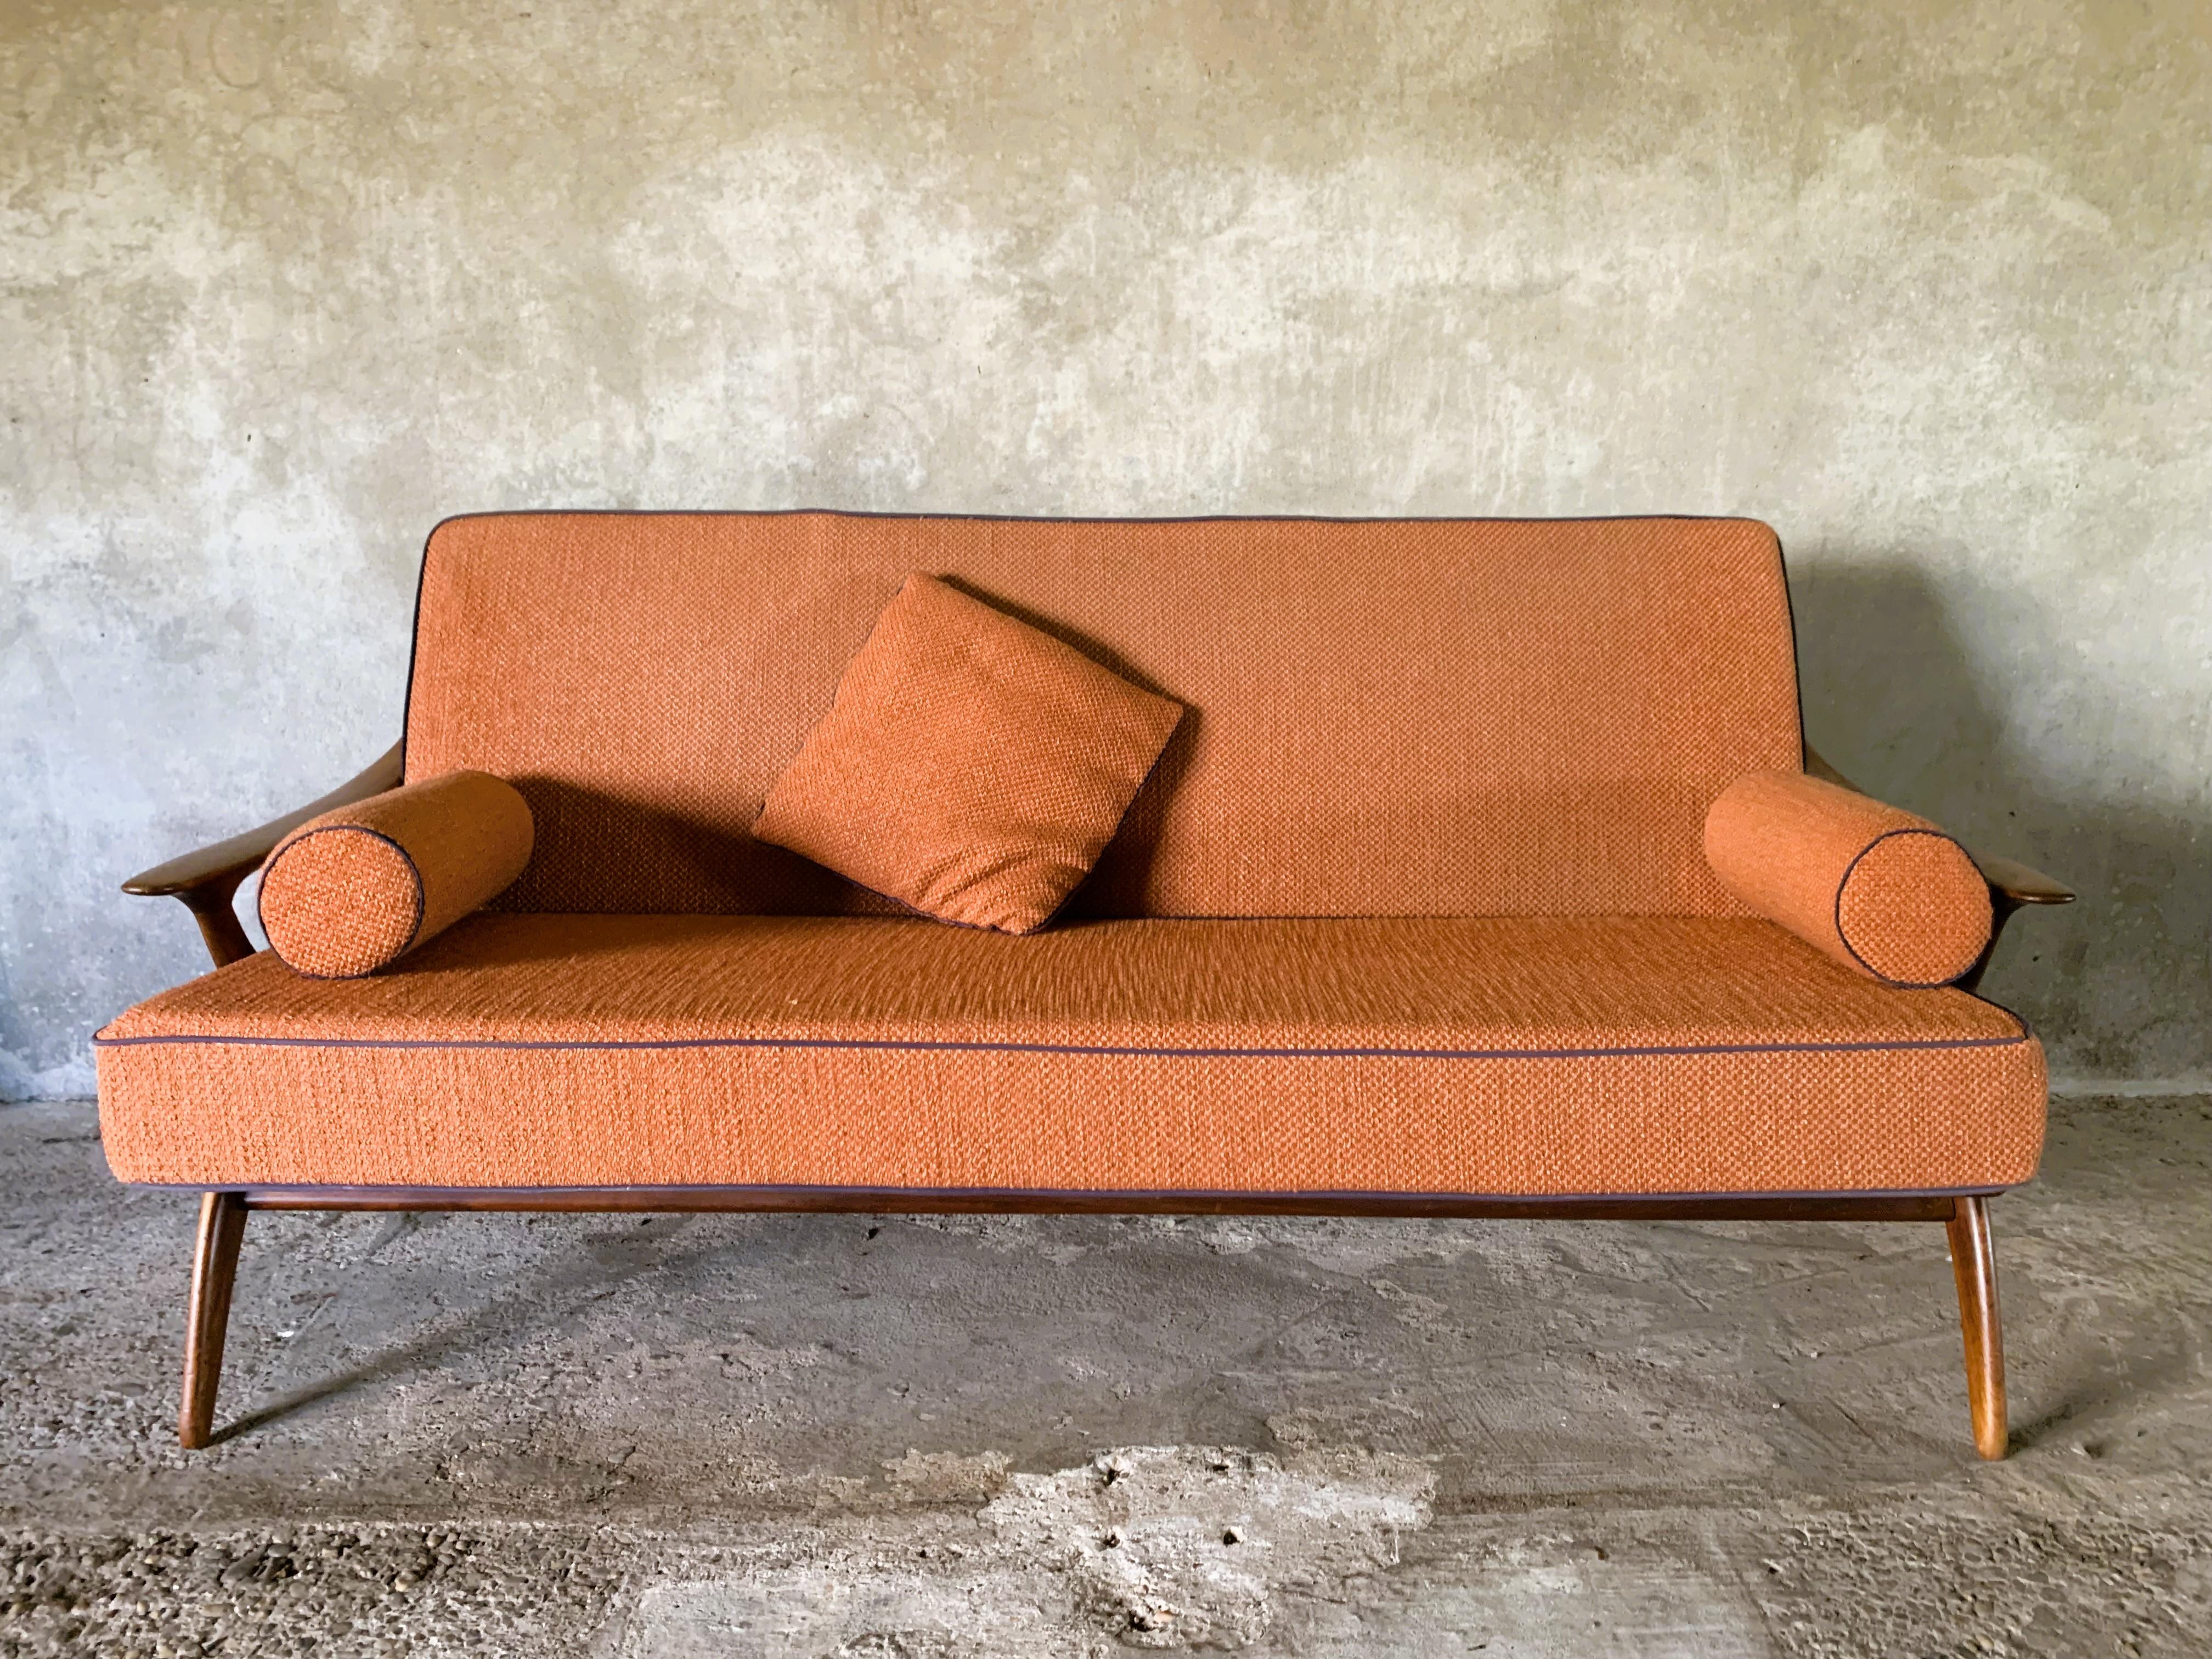 3 Seater sofa 'De Knoop' By De Ster Gelderland, Netherlands, 1960s For Sale 7